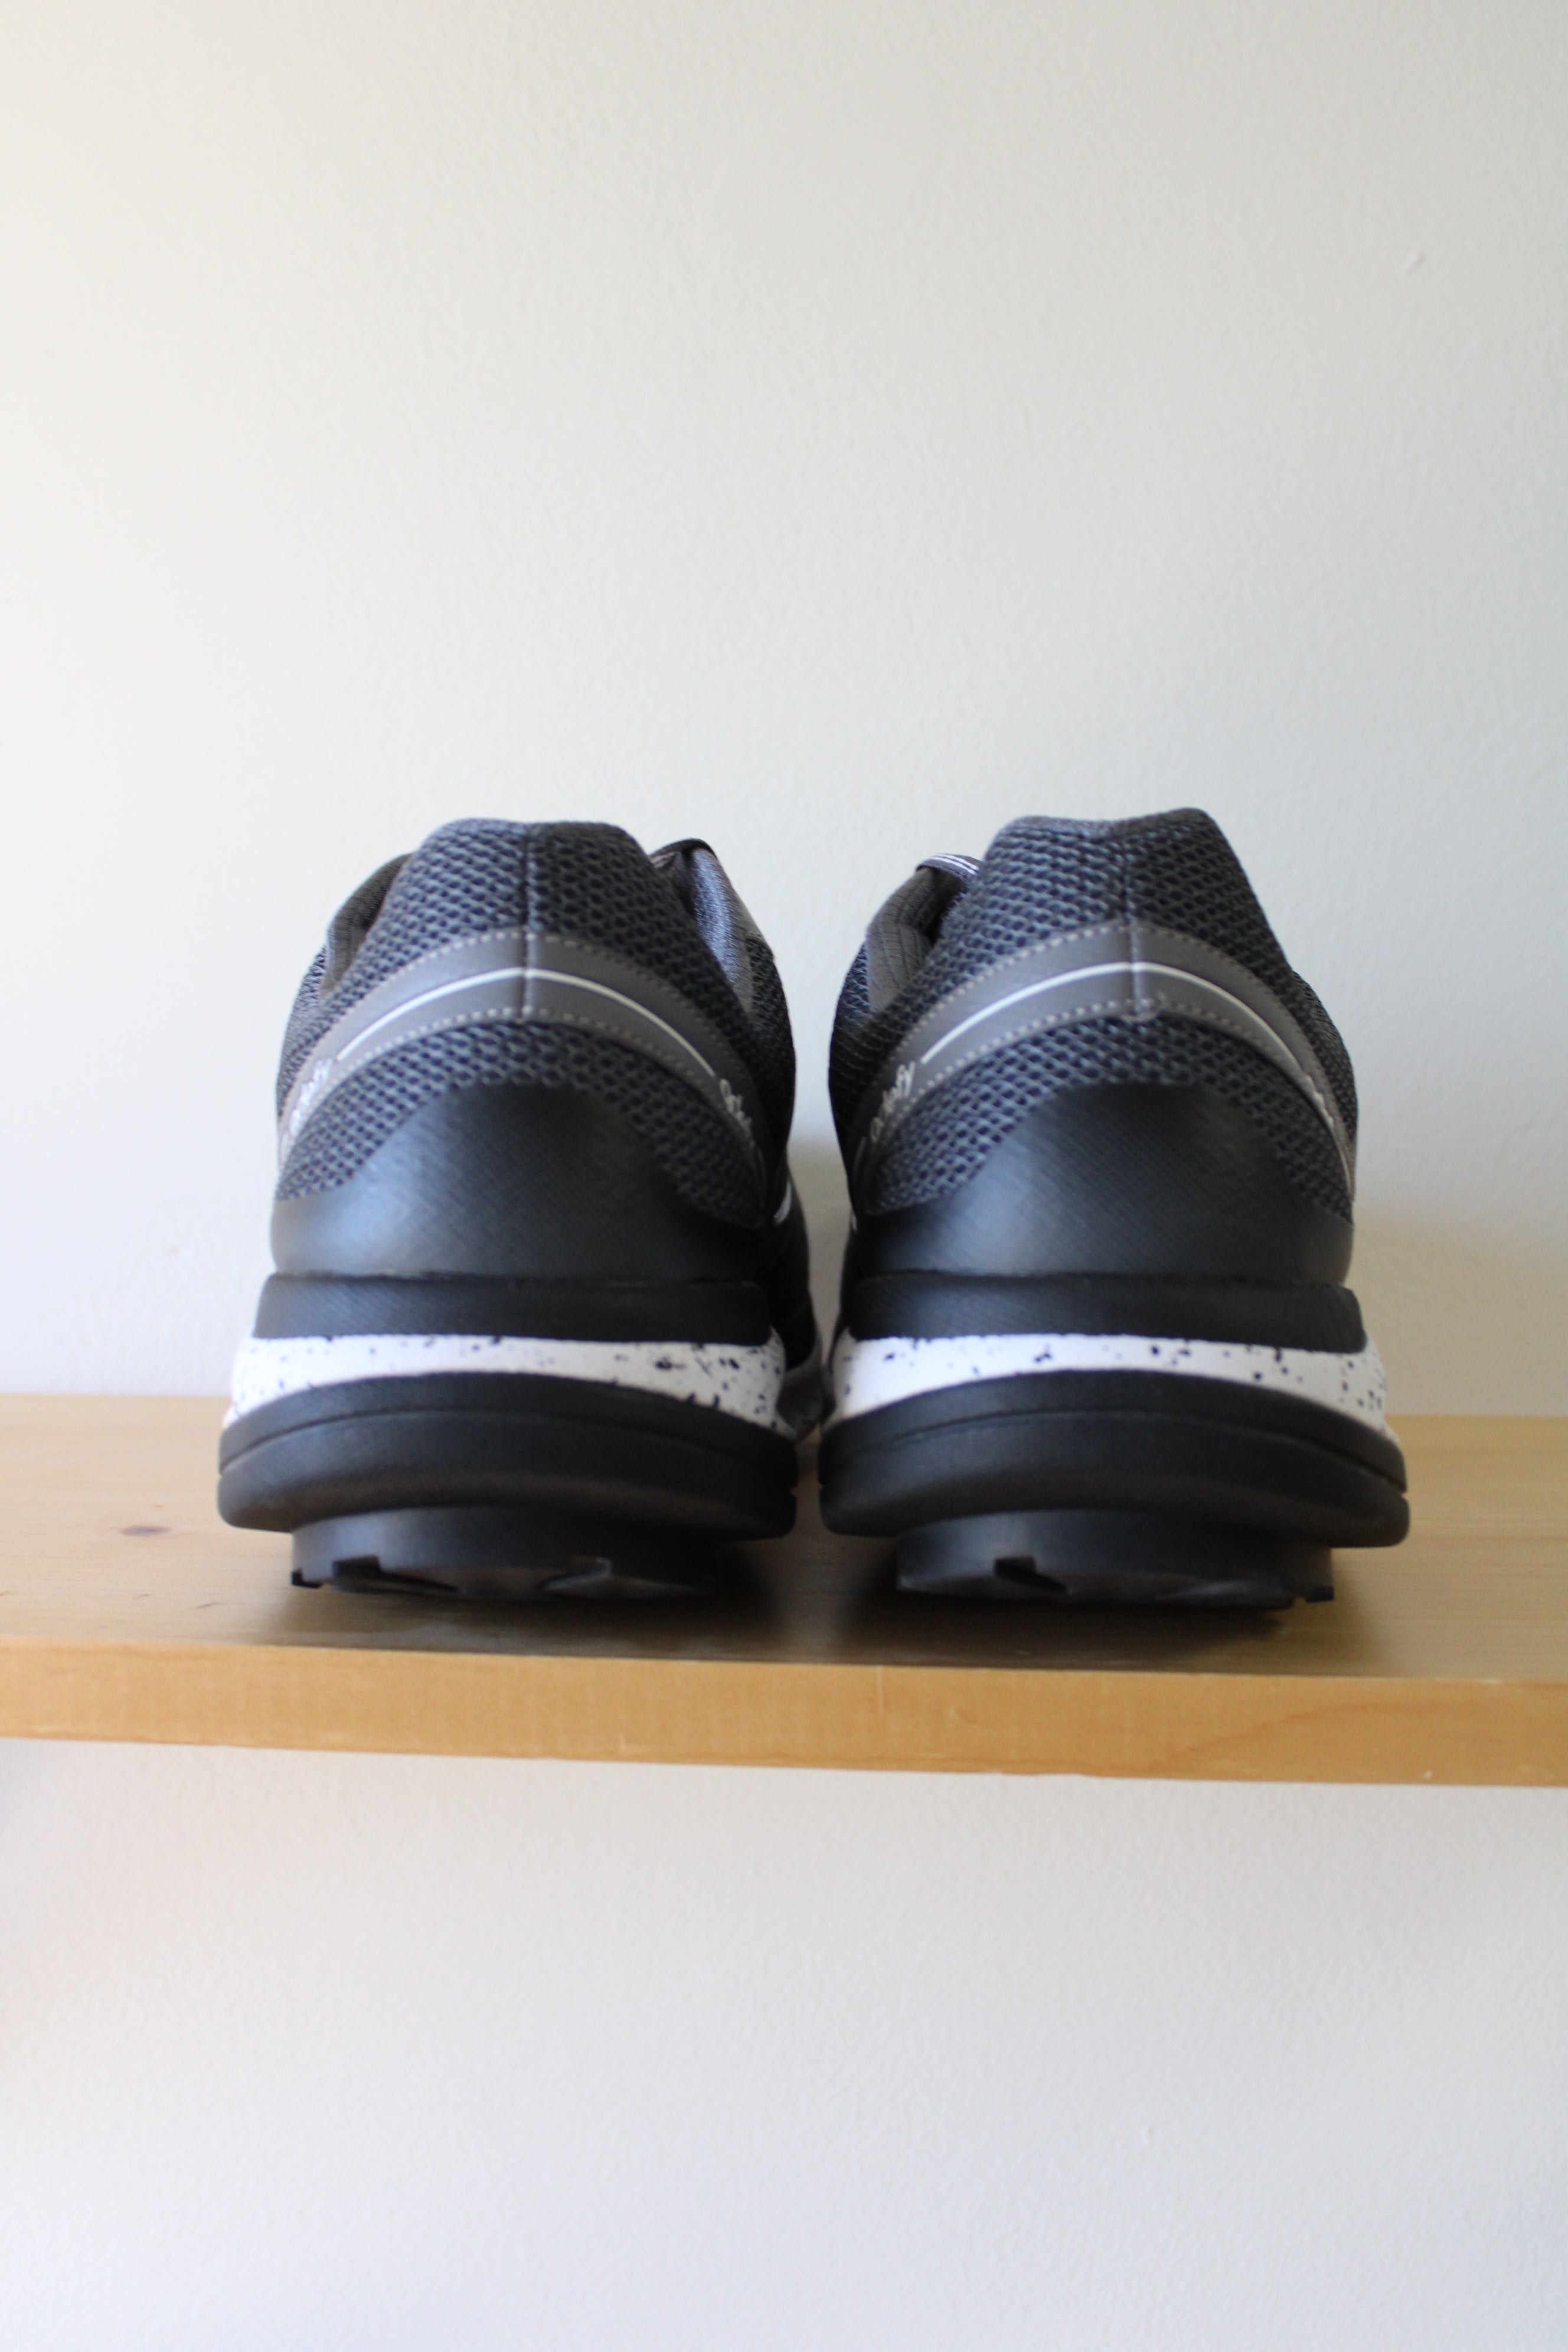 NEW Gdefy Mighty Walk Gray Sneakers | Size 13